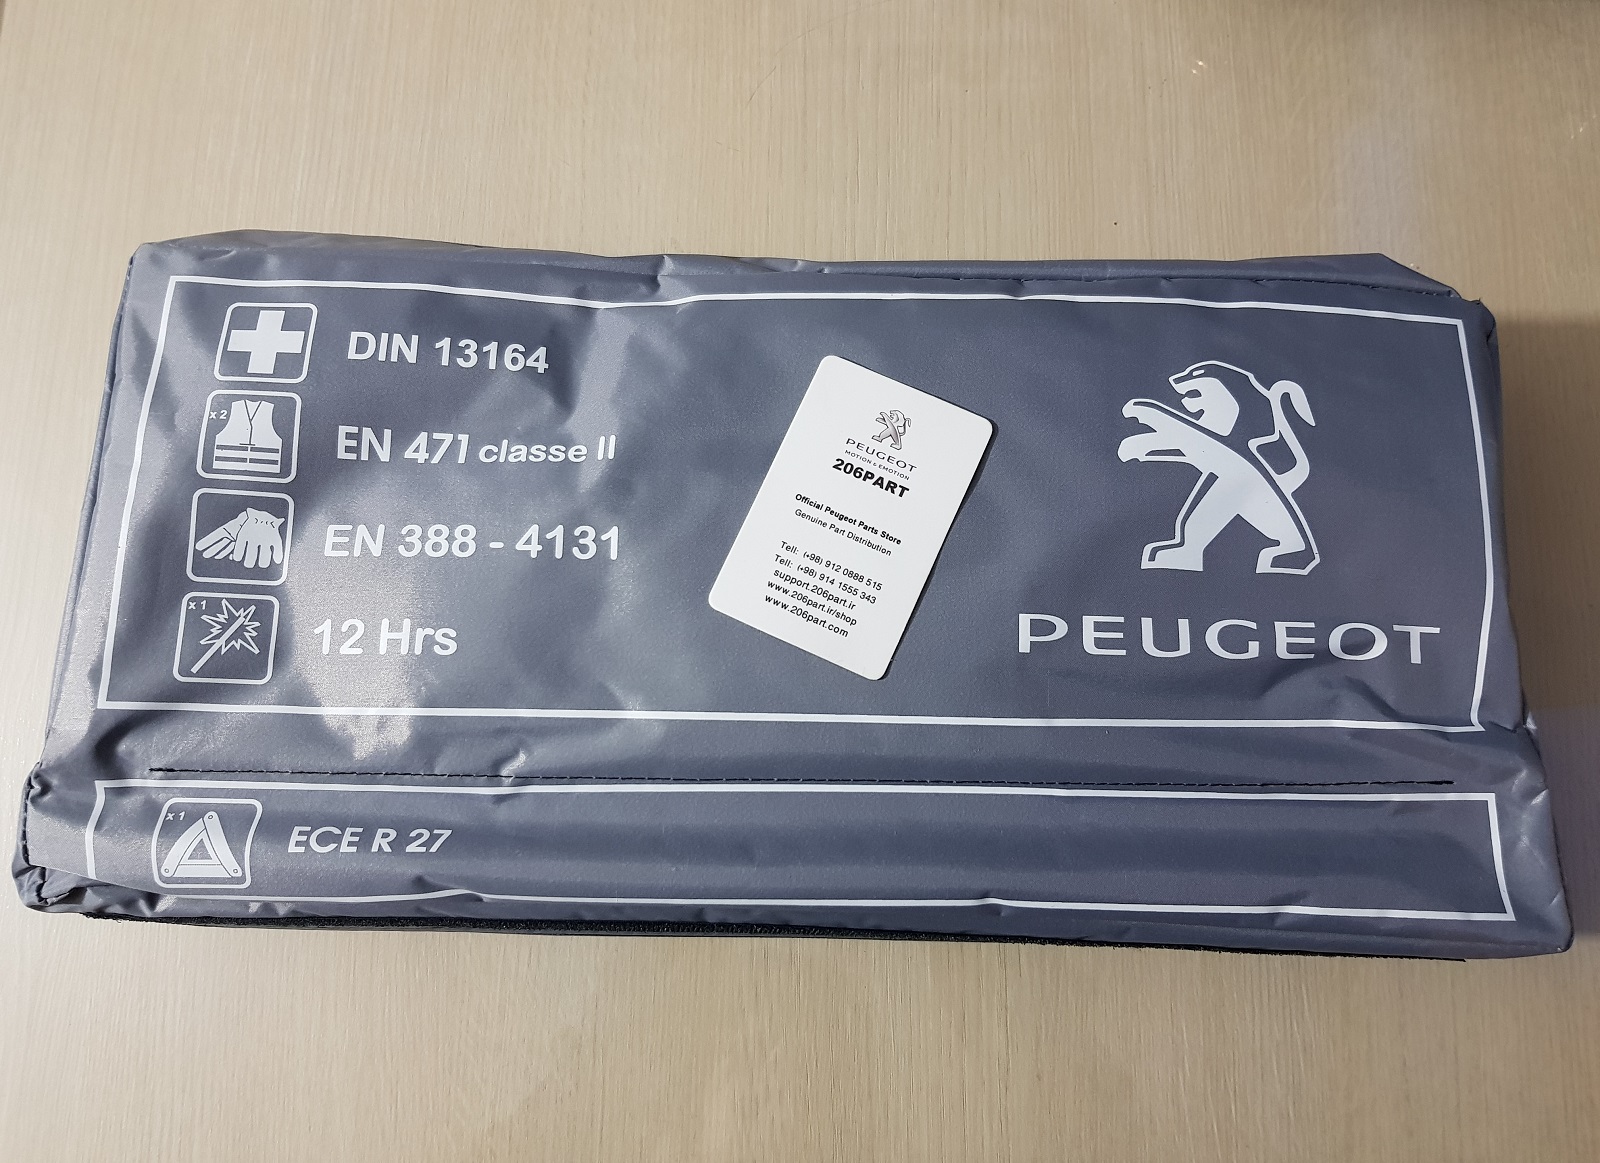 جعبه کمک های اولیه PEUGEOT فول پک با مثلث خطر – فرانسه